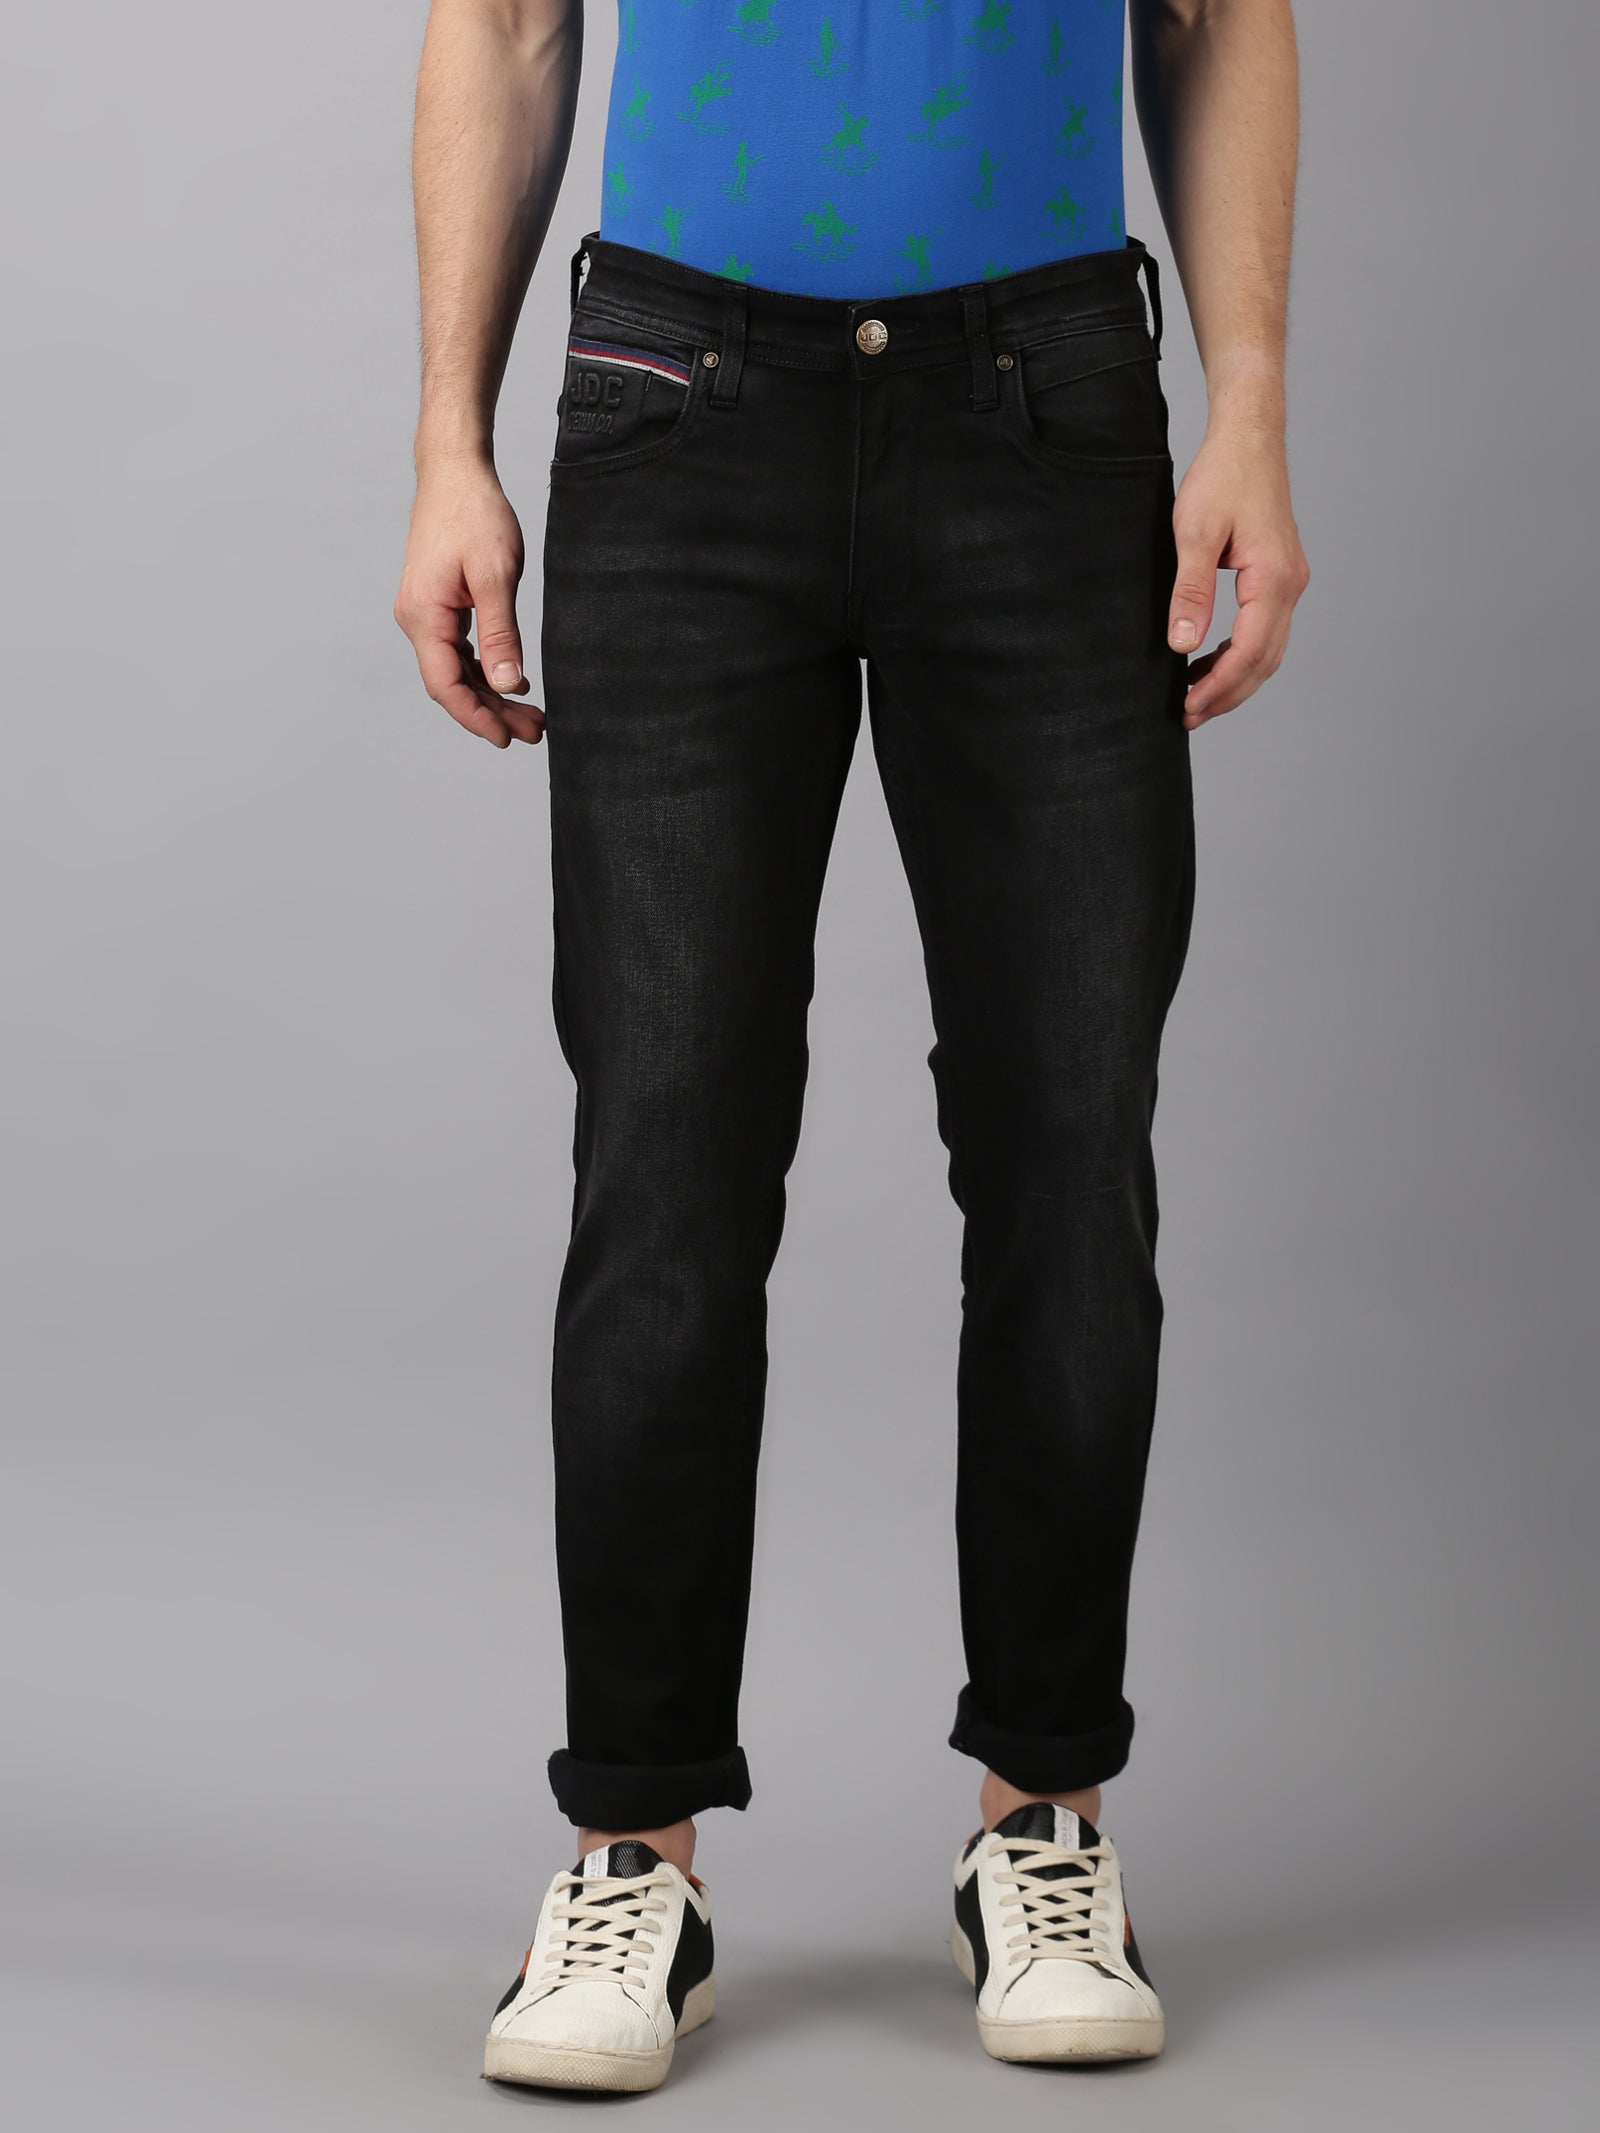 Nice fade on these Black raw denims | Raw denim, Denim inspiration, Denim  jeans fashion